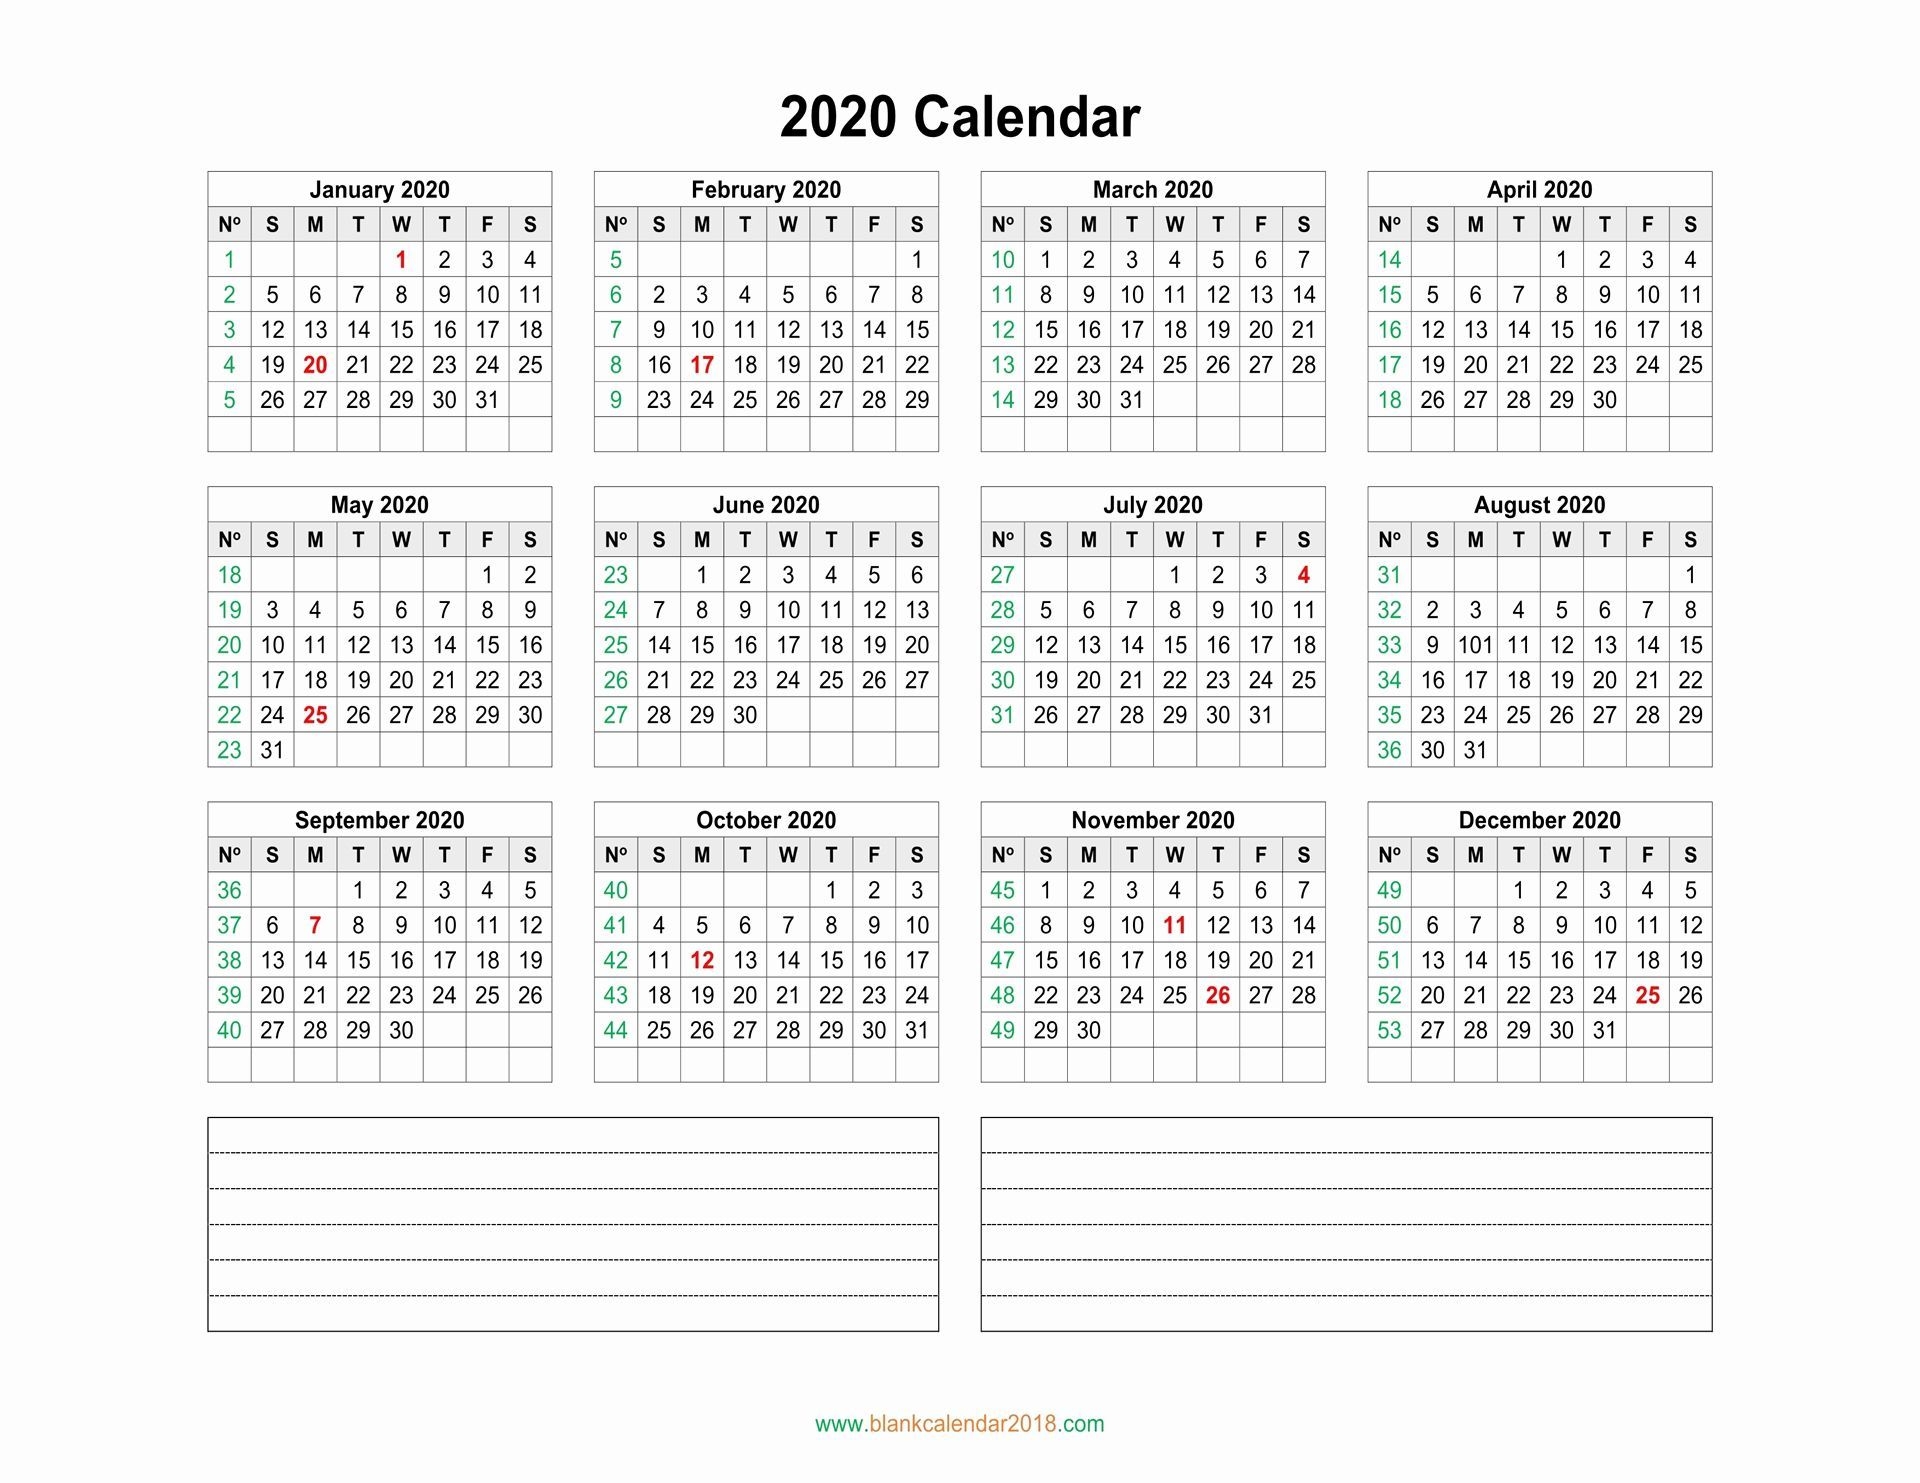 Printable Calendar Without Weekends In 2020 | 2020 Calendar